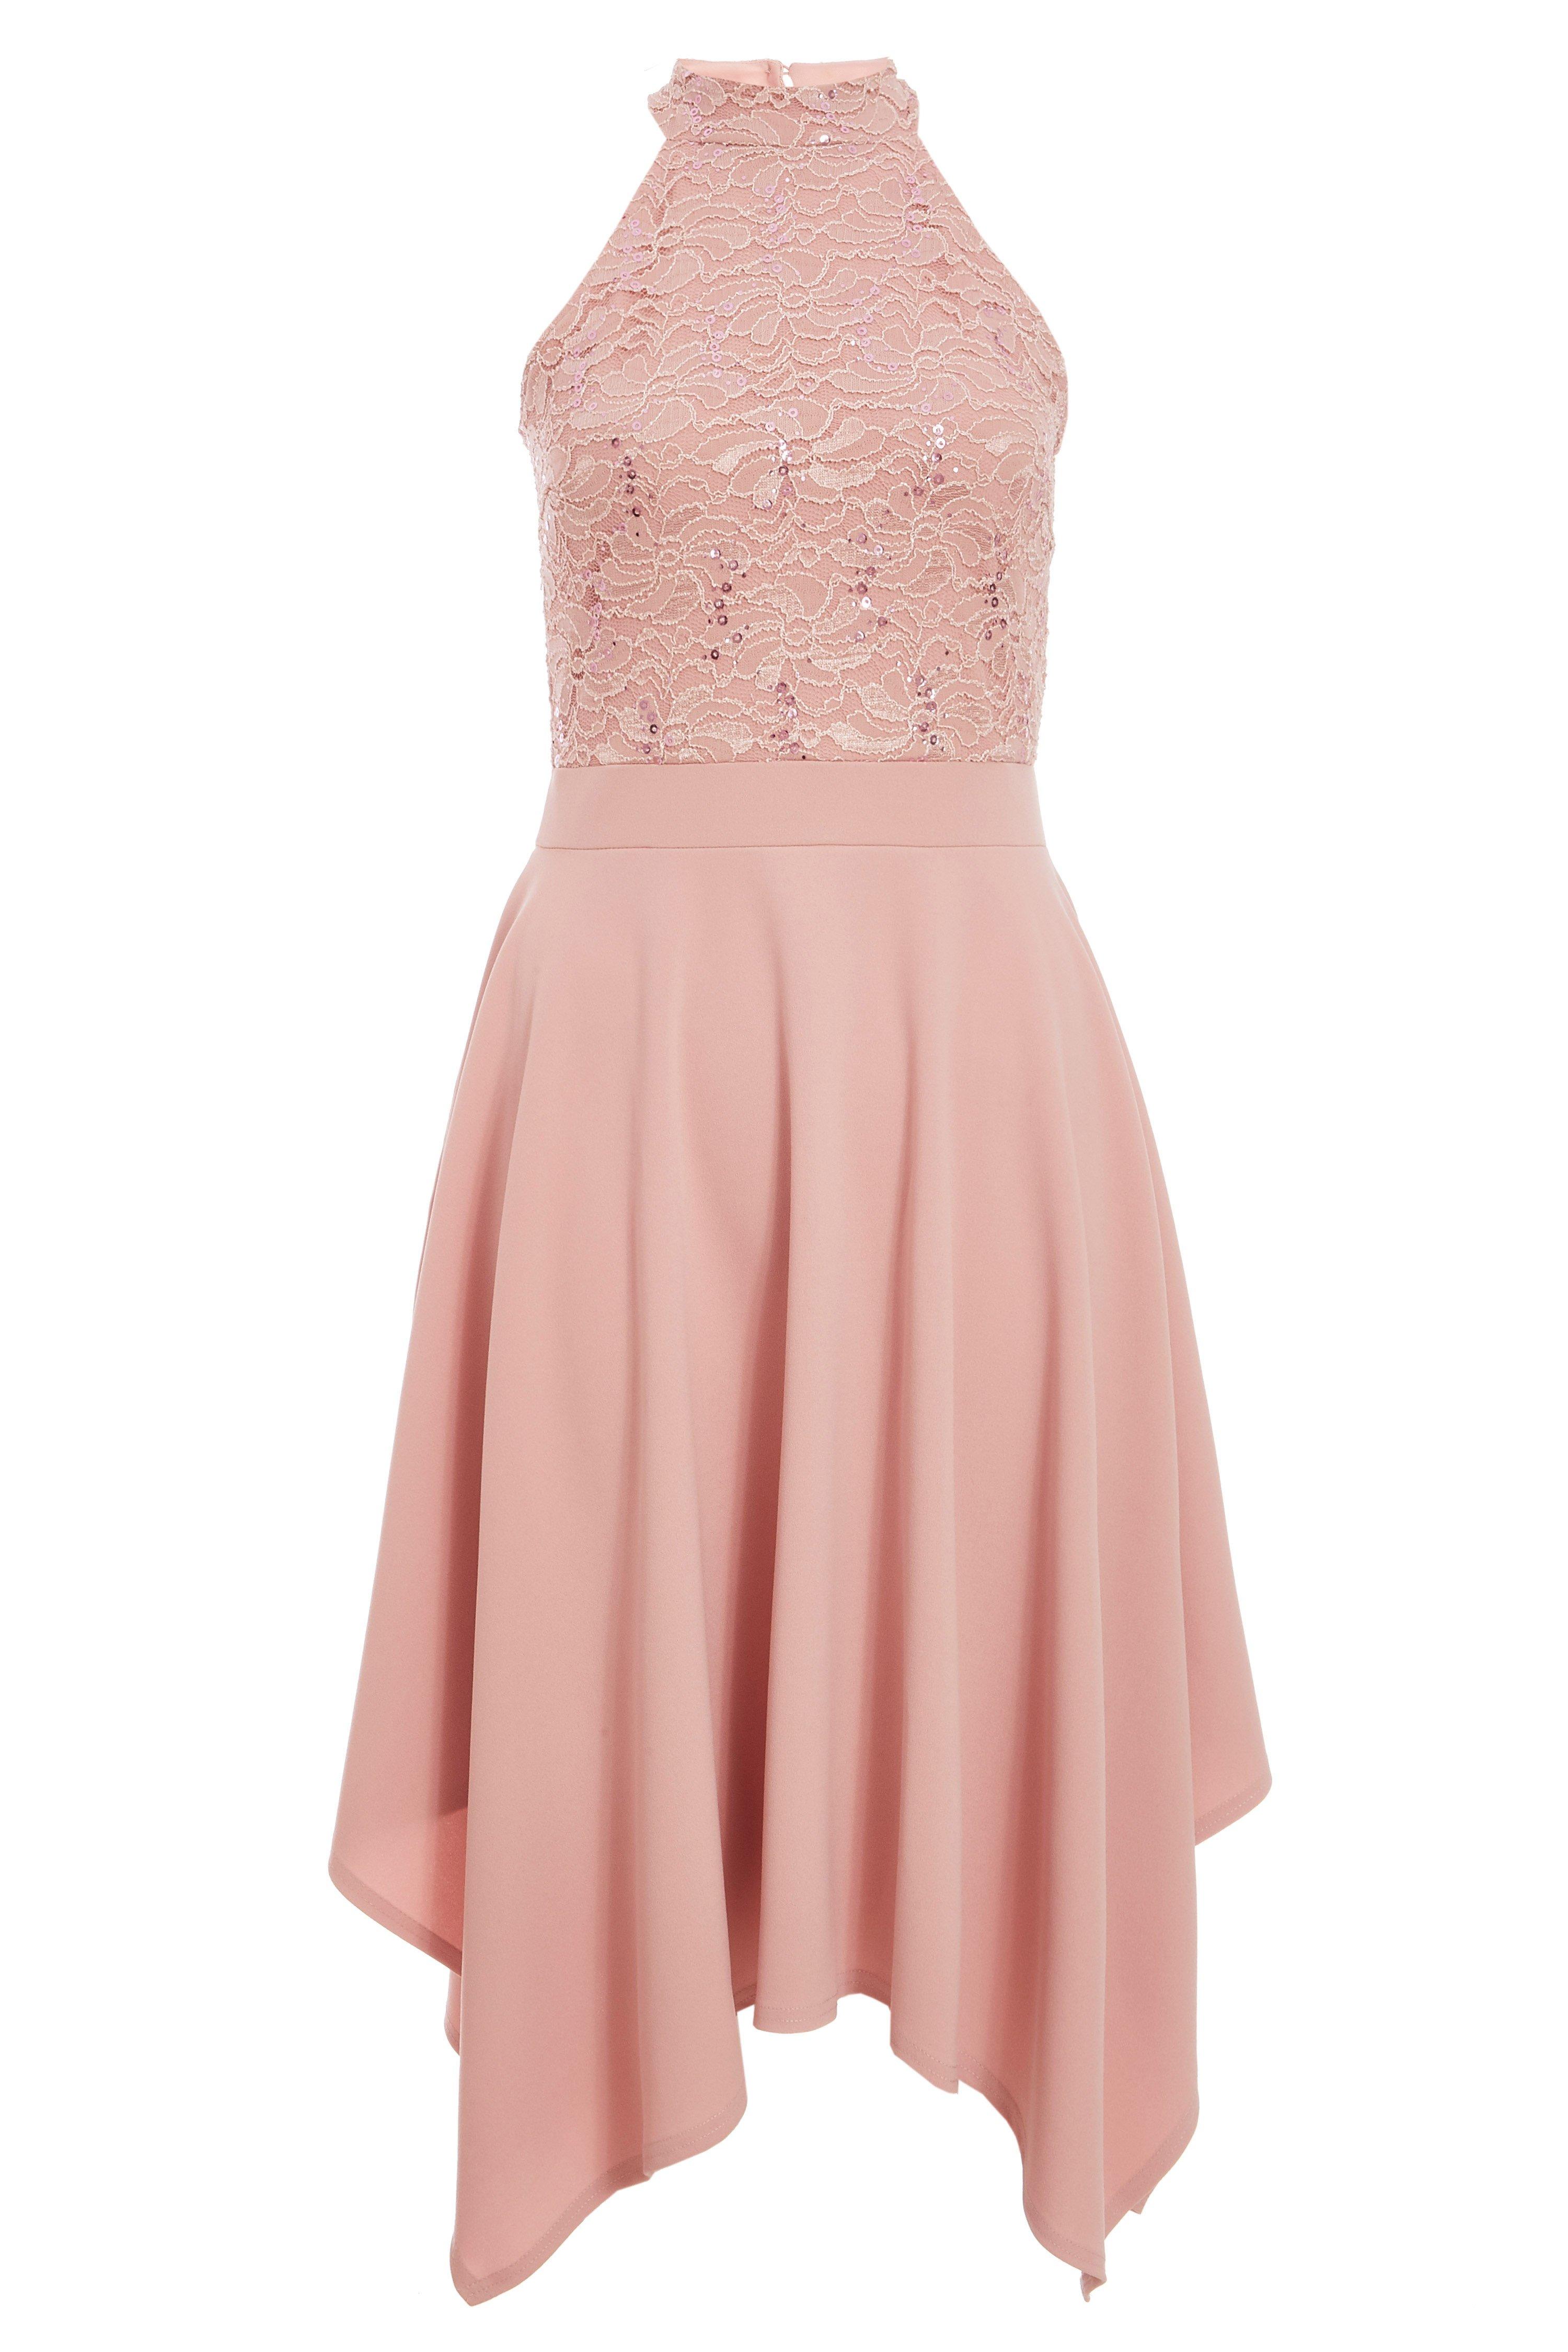 Blush Pink Sequin Lace High Neck Midi Dress - Quiz Clothing